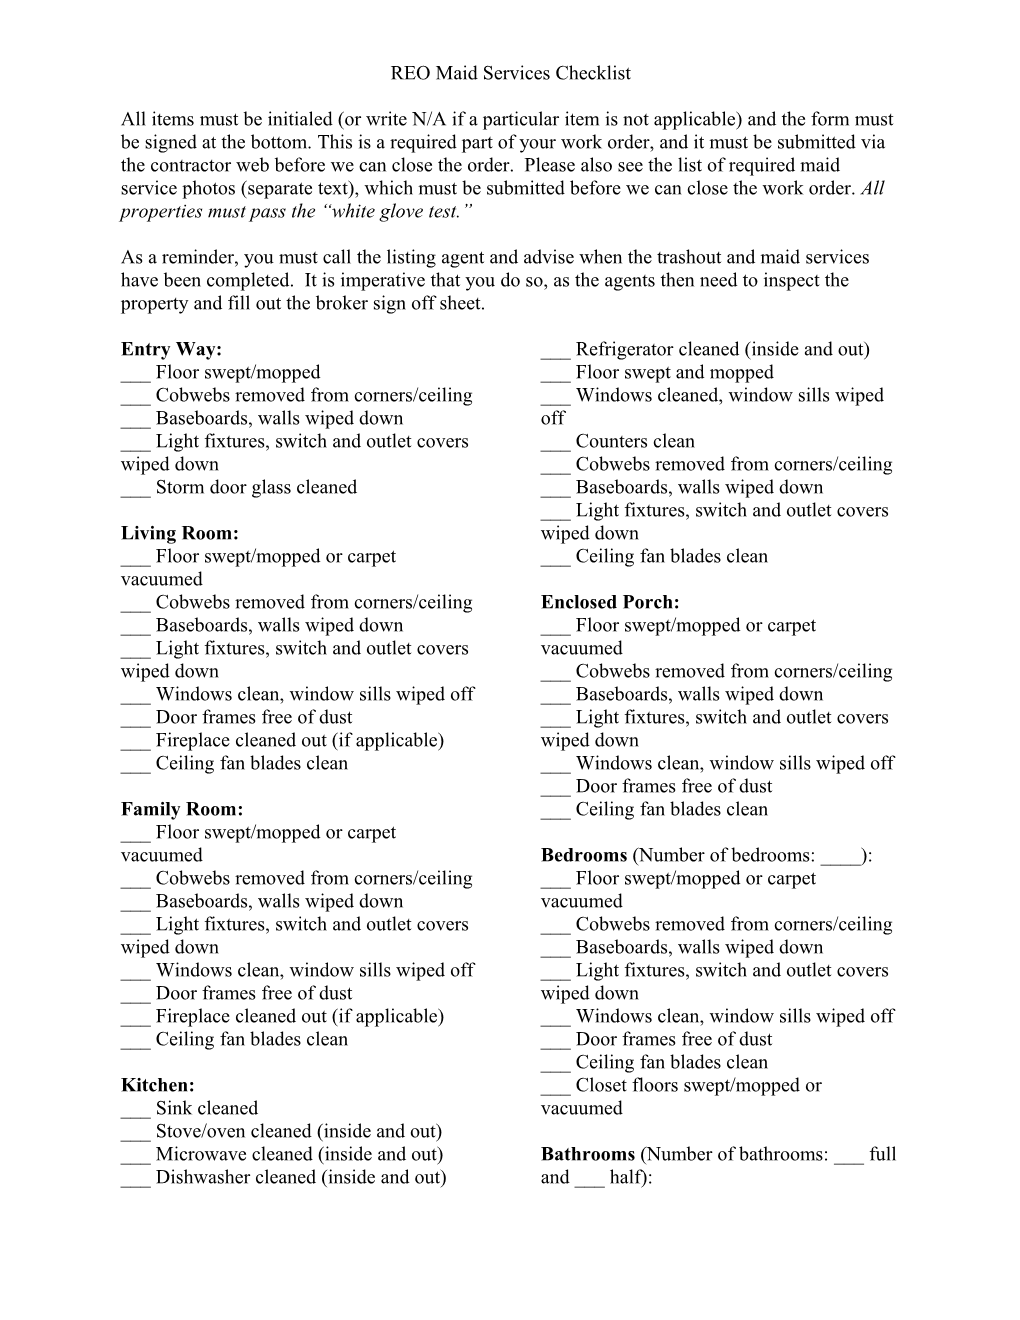 REO Maid Services Checklist